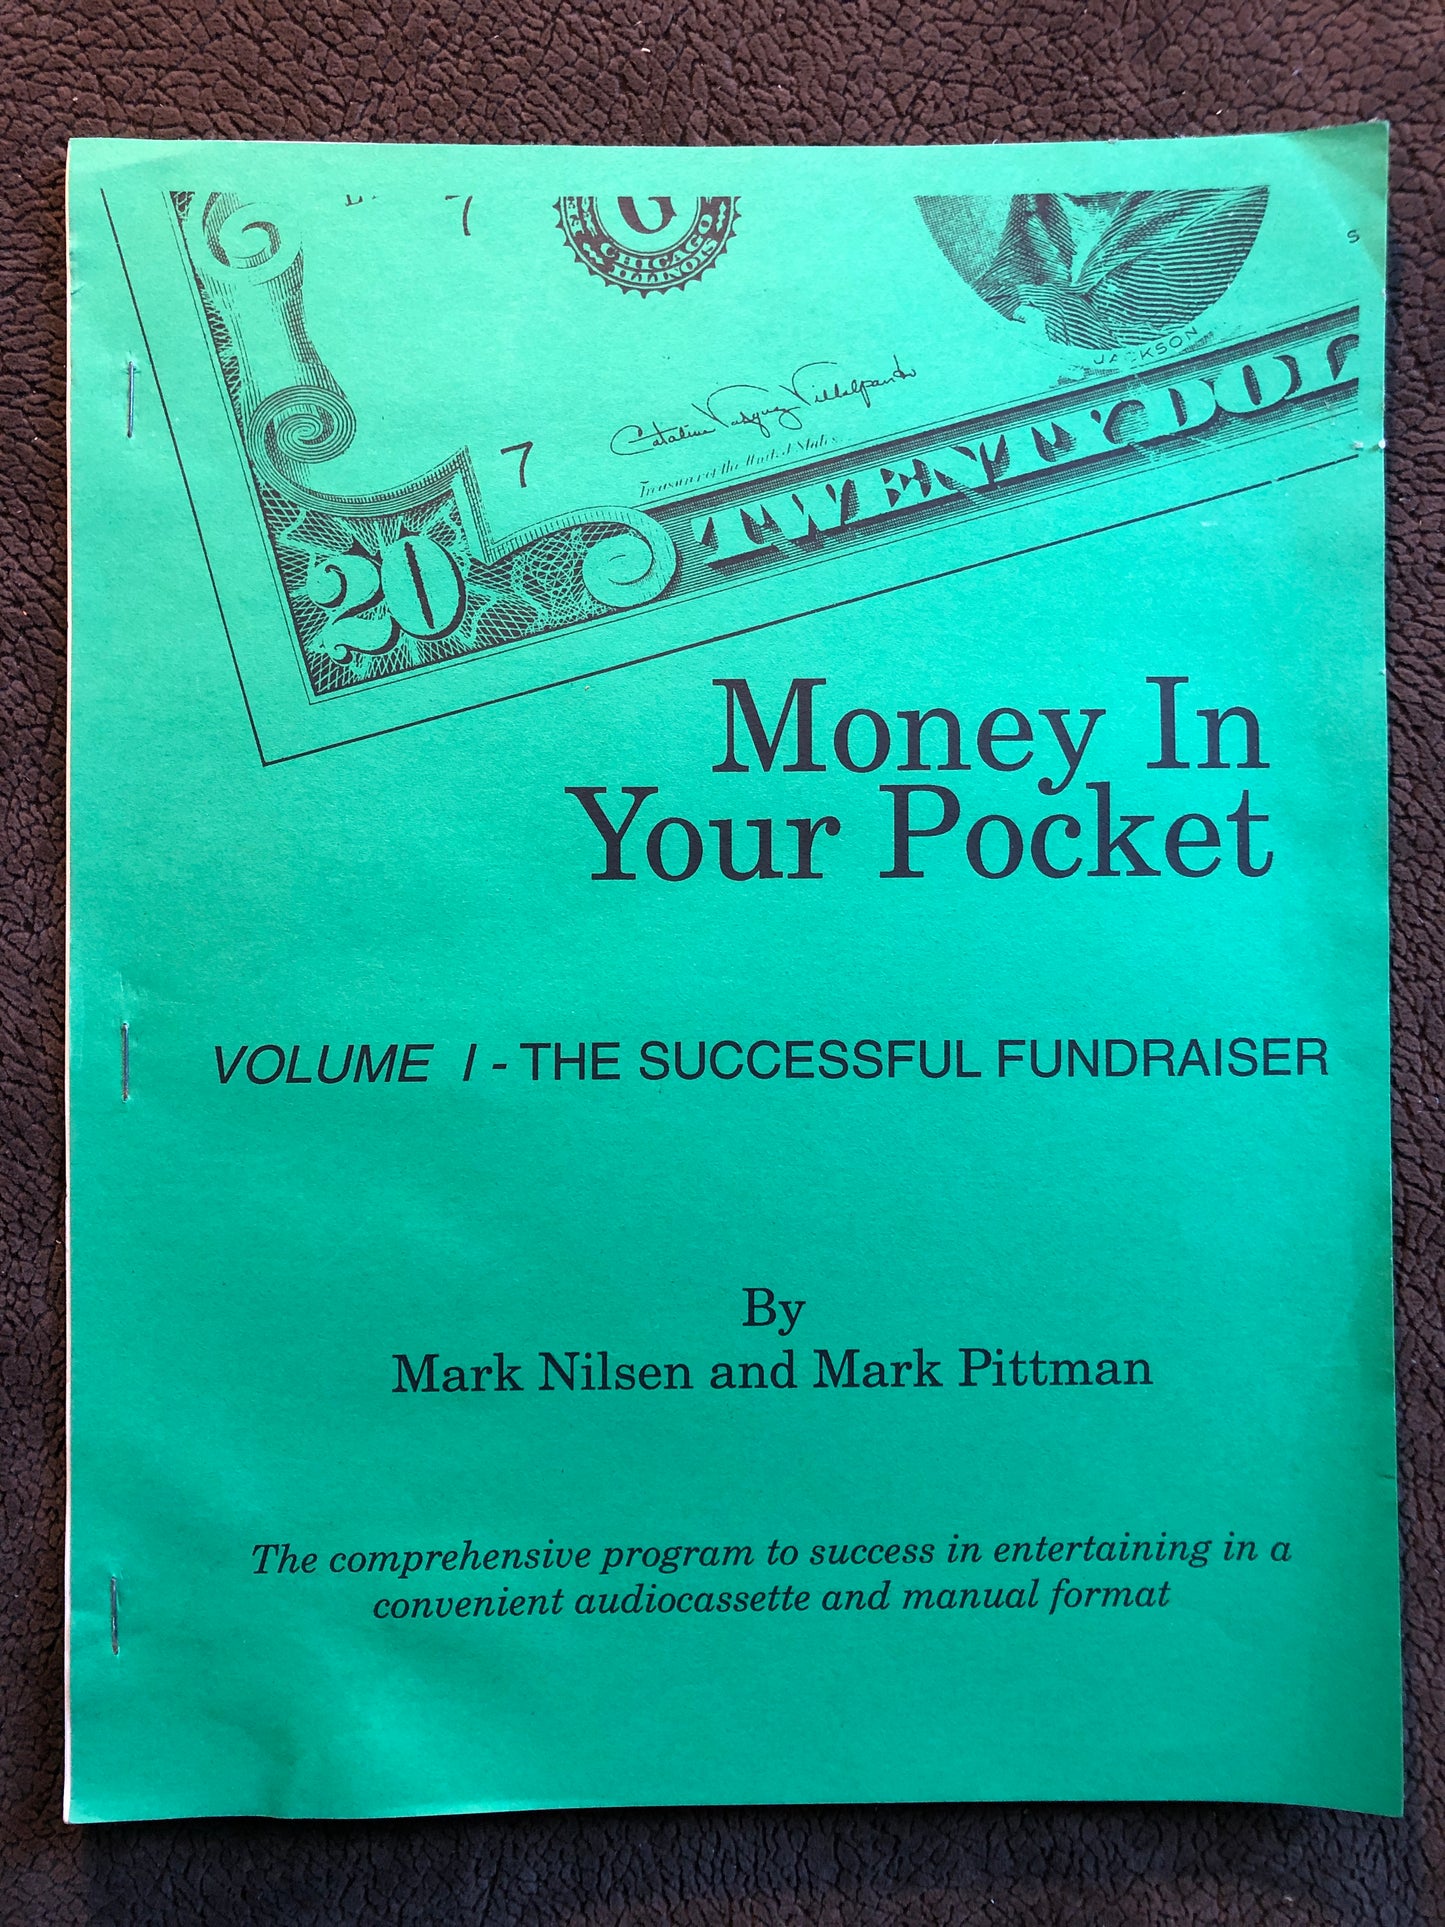 Money in Your Pocket: The Successful Fundraiser Vol. 1 - Mark Nilsen & Mark Pittman